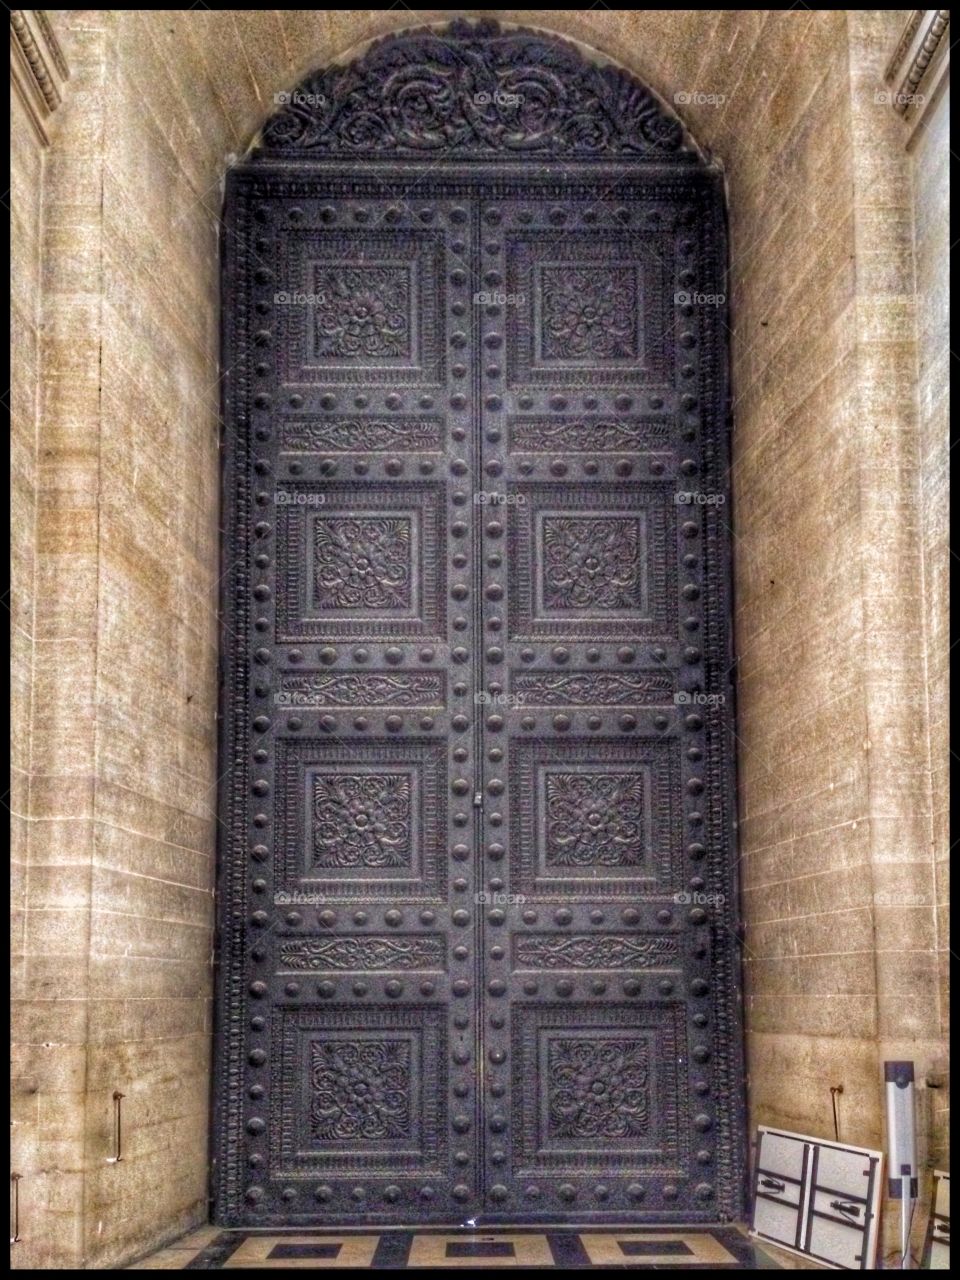 Pantheon Paris. Such beautiful doors found all over Paris